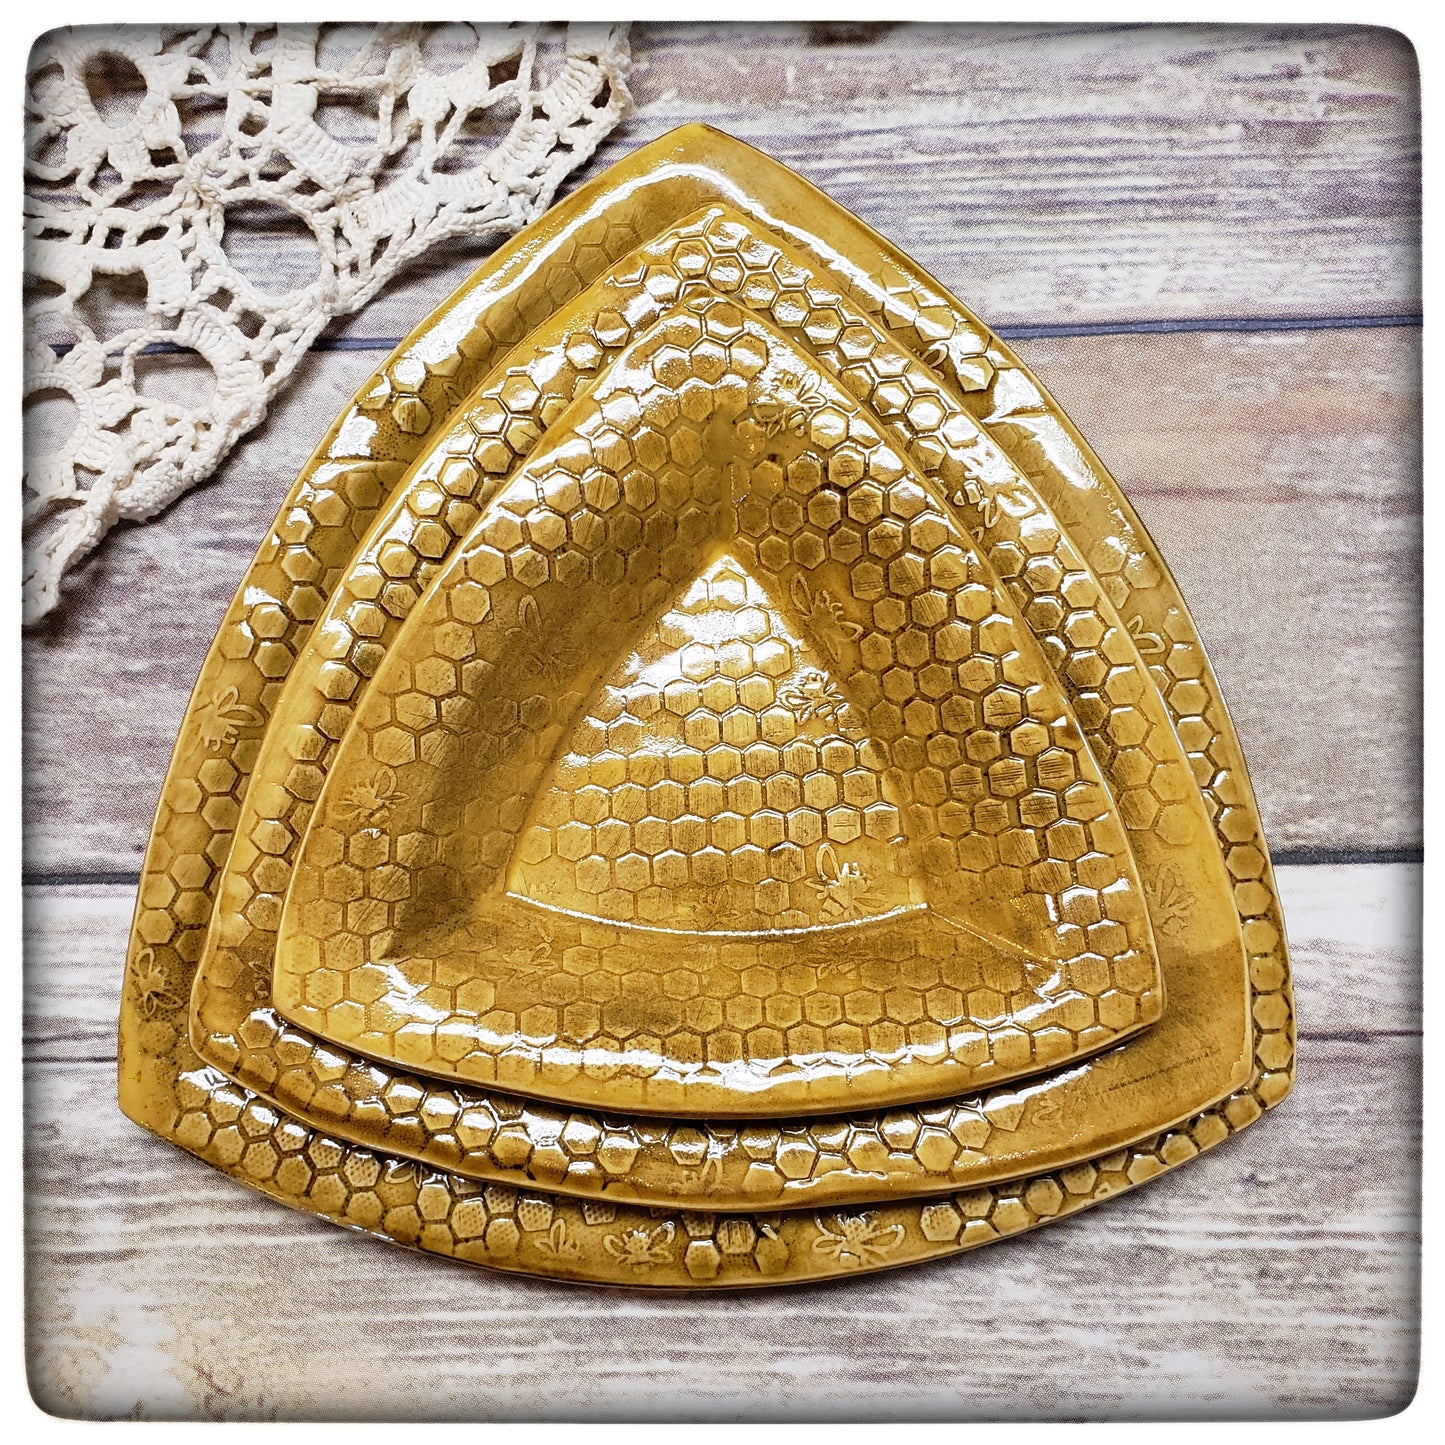 Honeycomb triangle dish (7 inch)